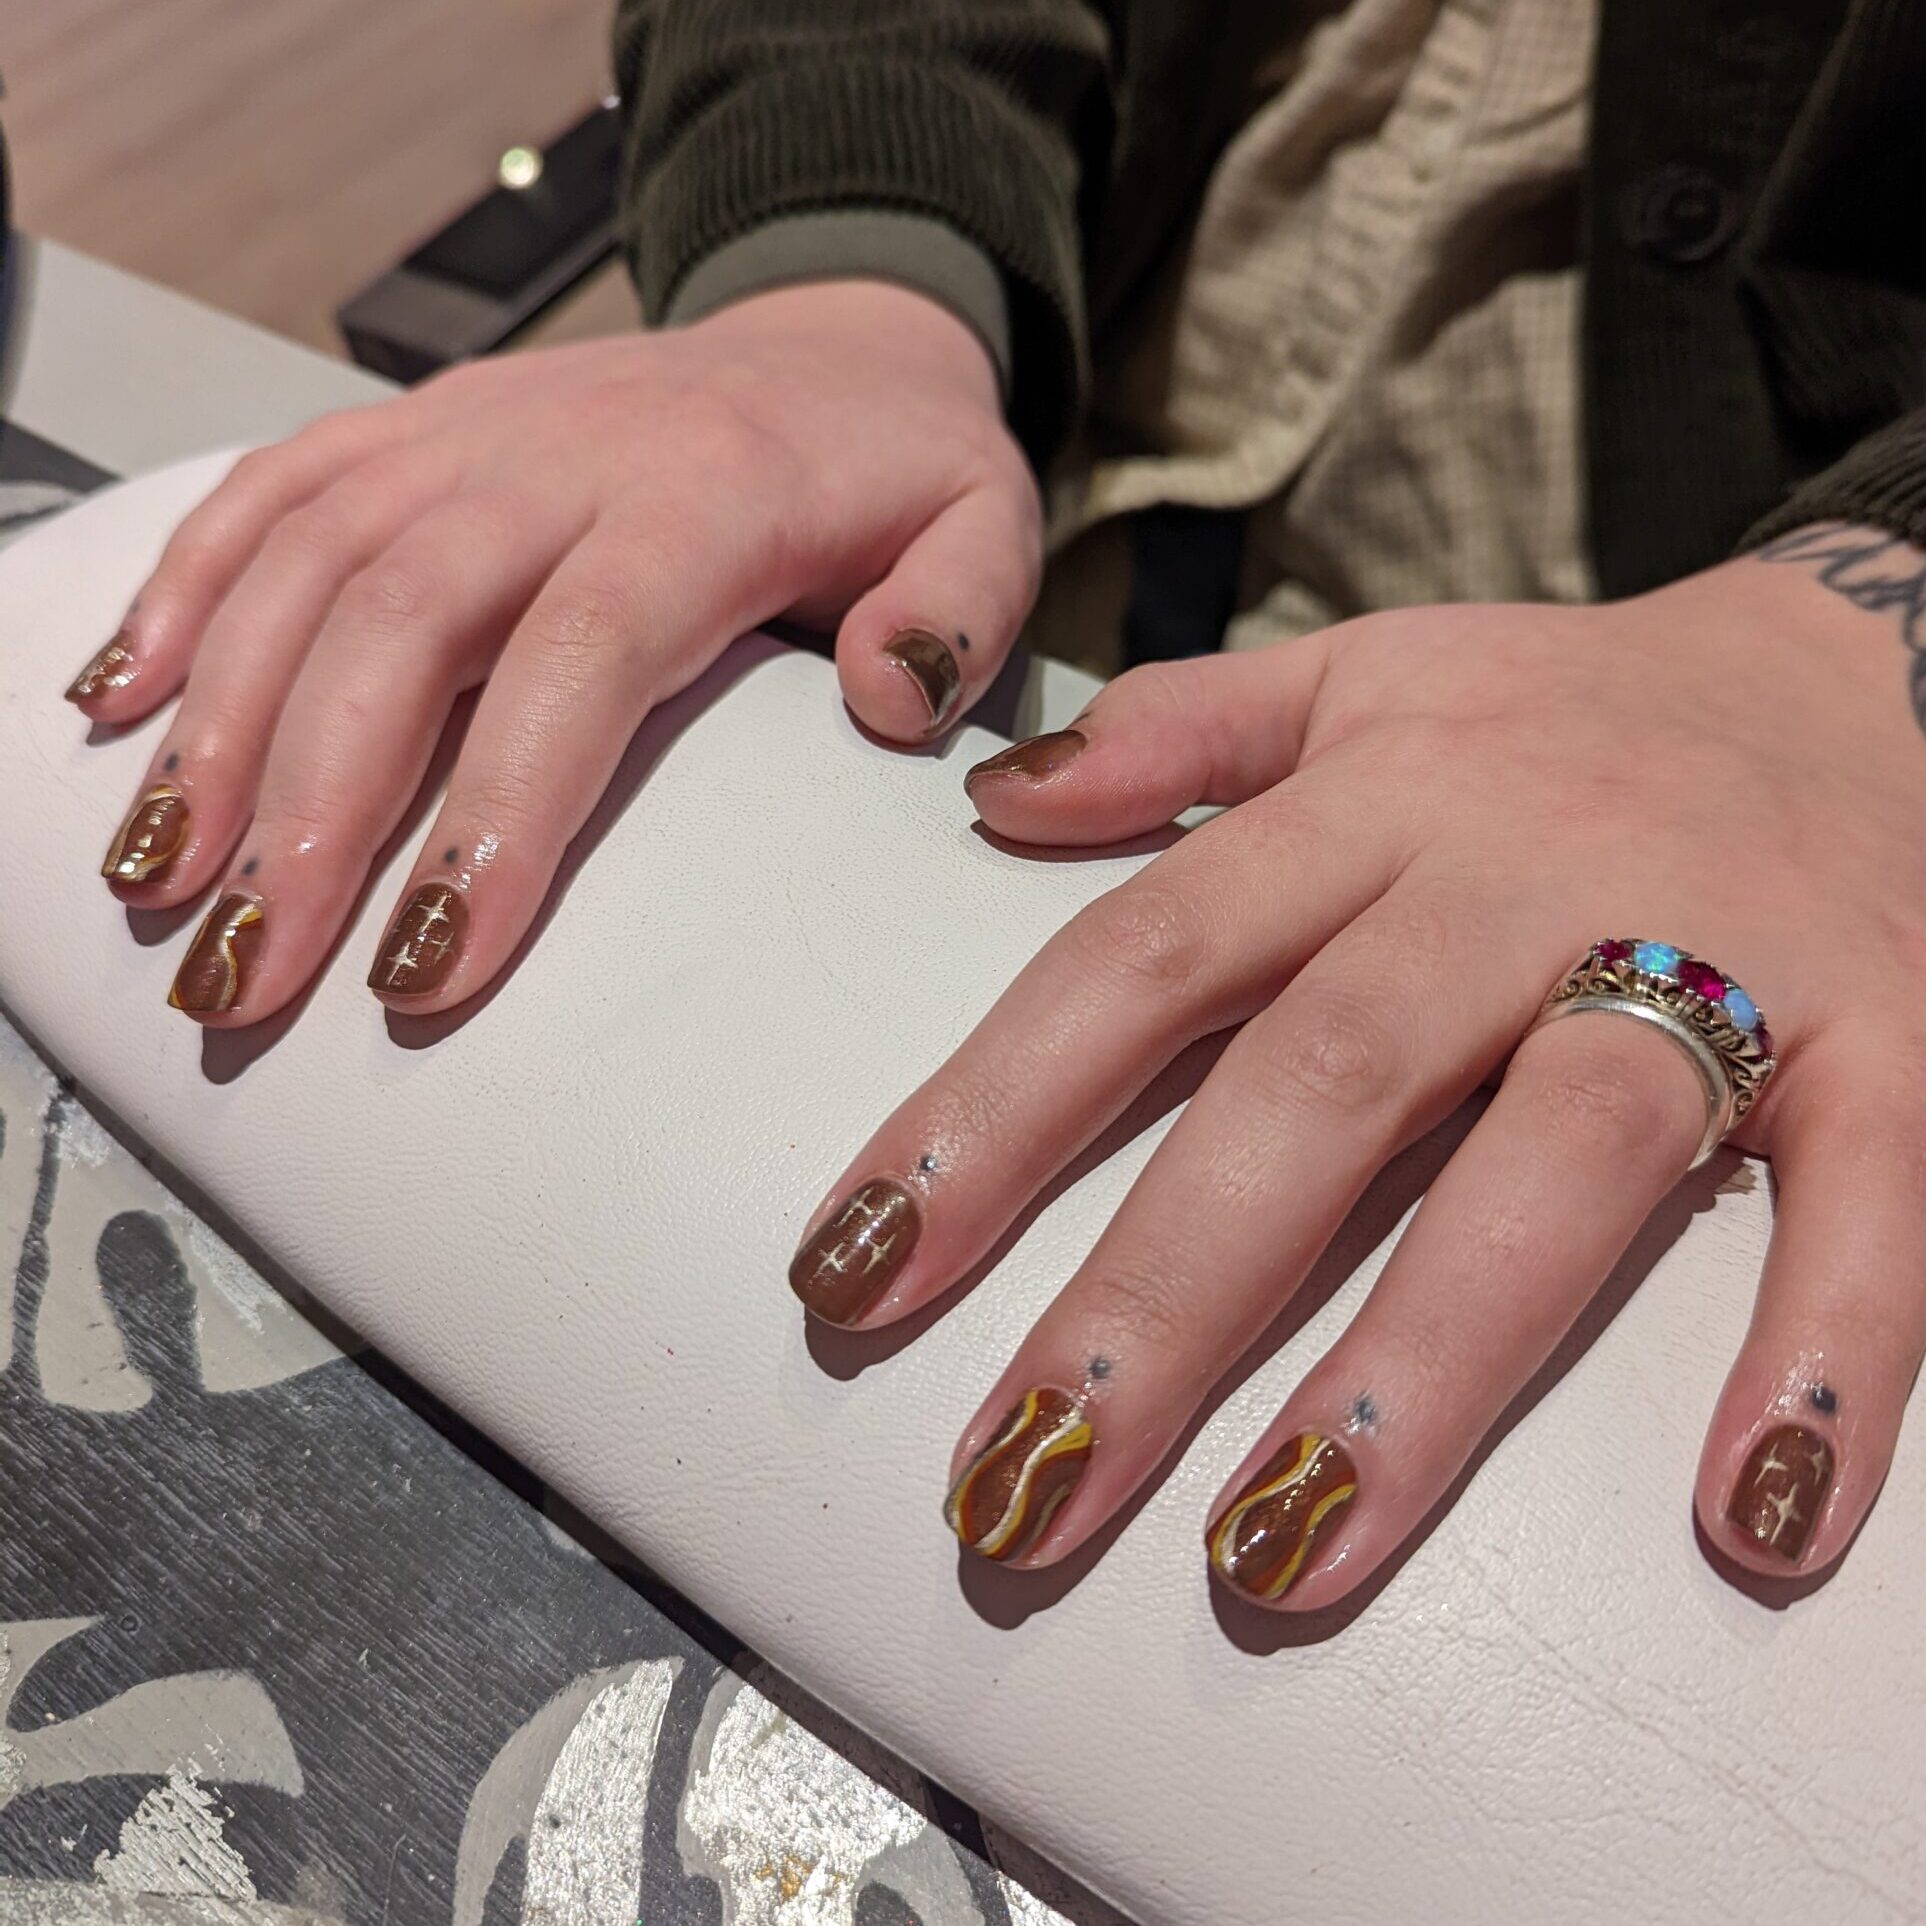 Brown gel nails with caramel swirls